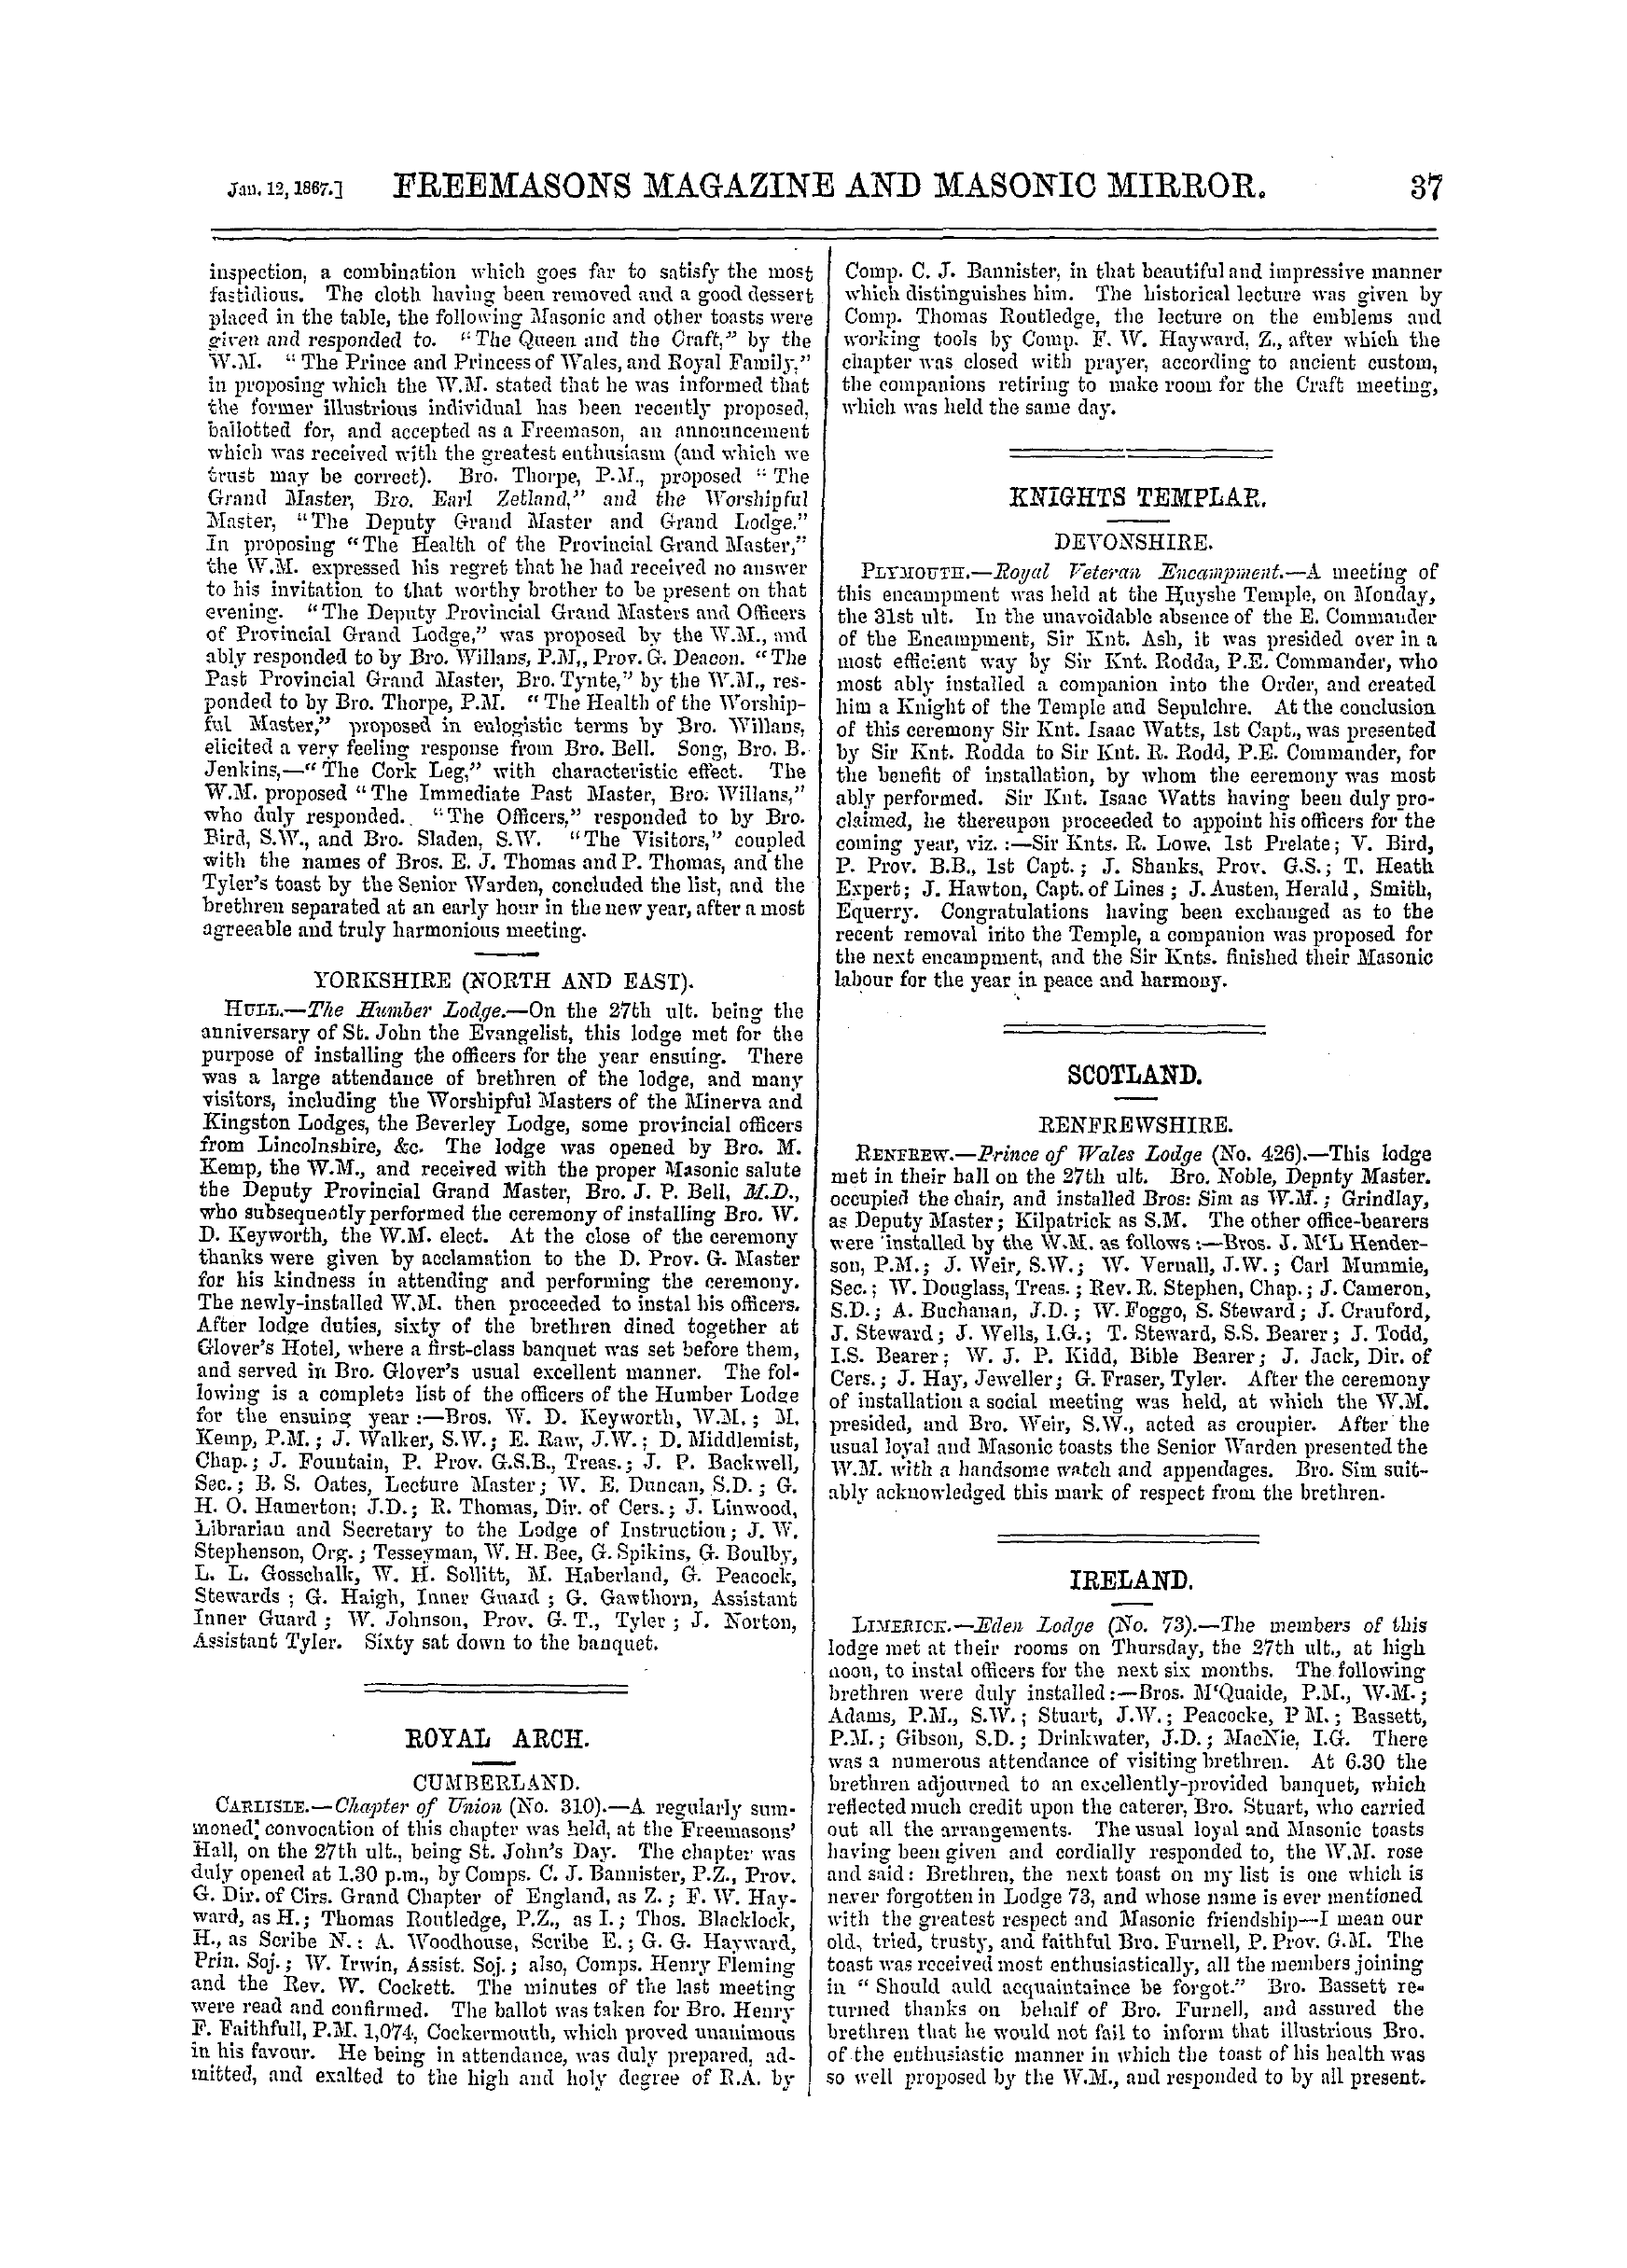 The Freemasons' Monthly Magazine: 1867-01-12 - Provincial.